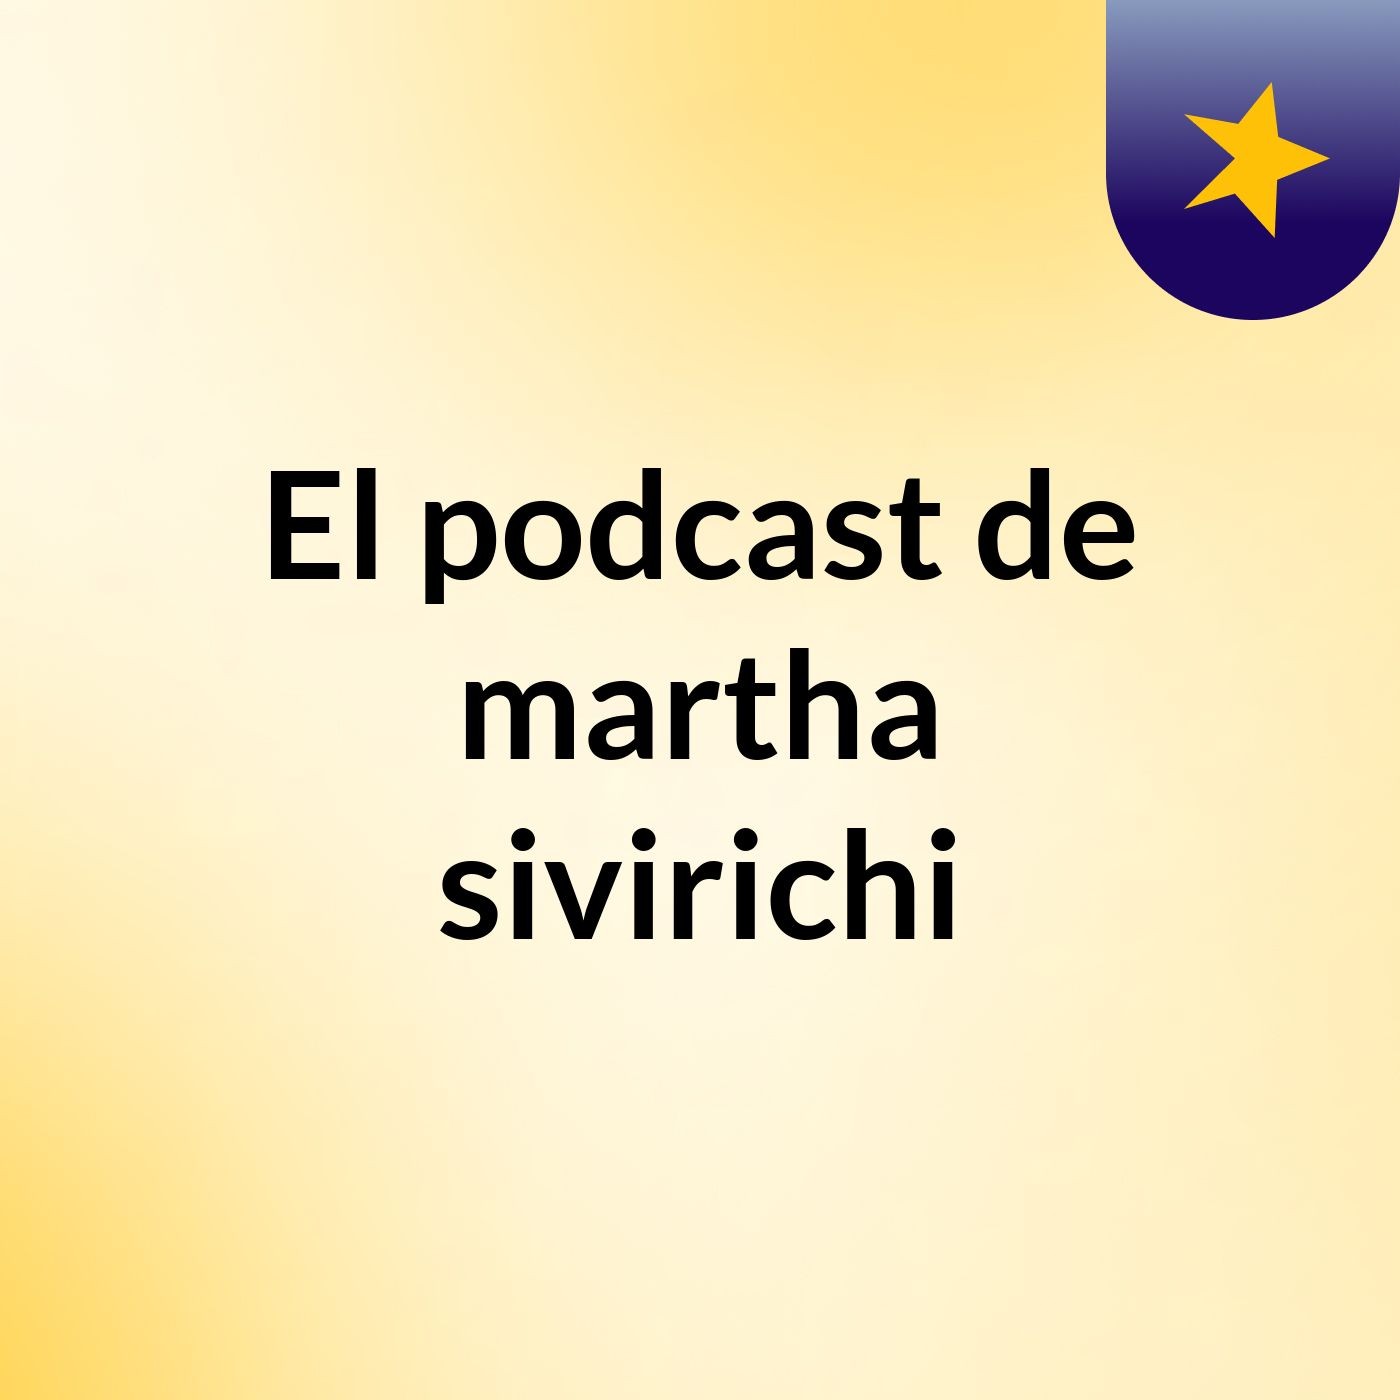 Episodio 4 - El podcast de martha sivirichi